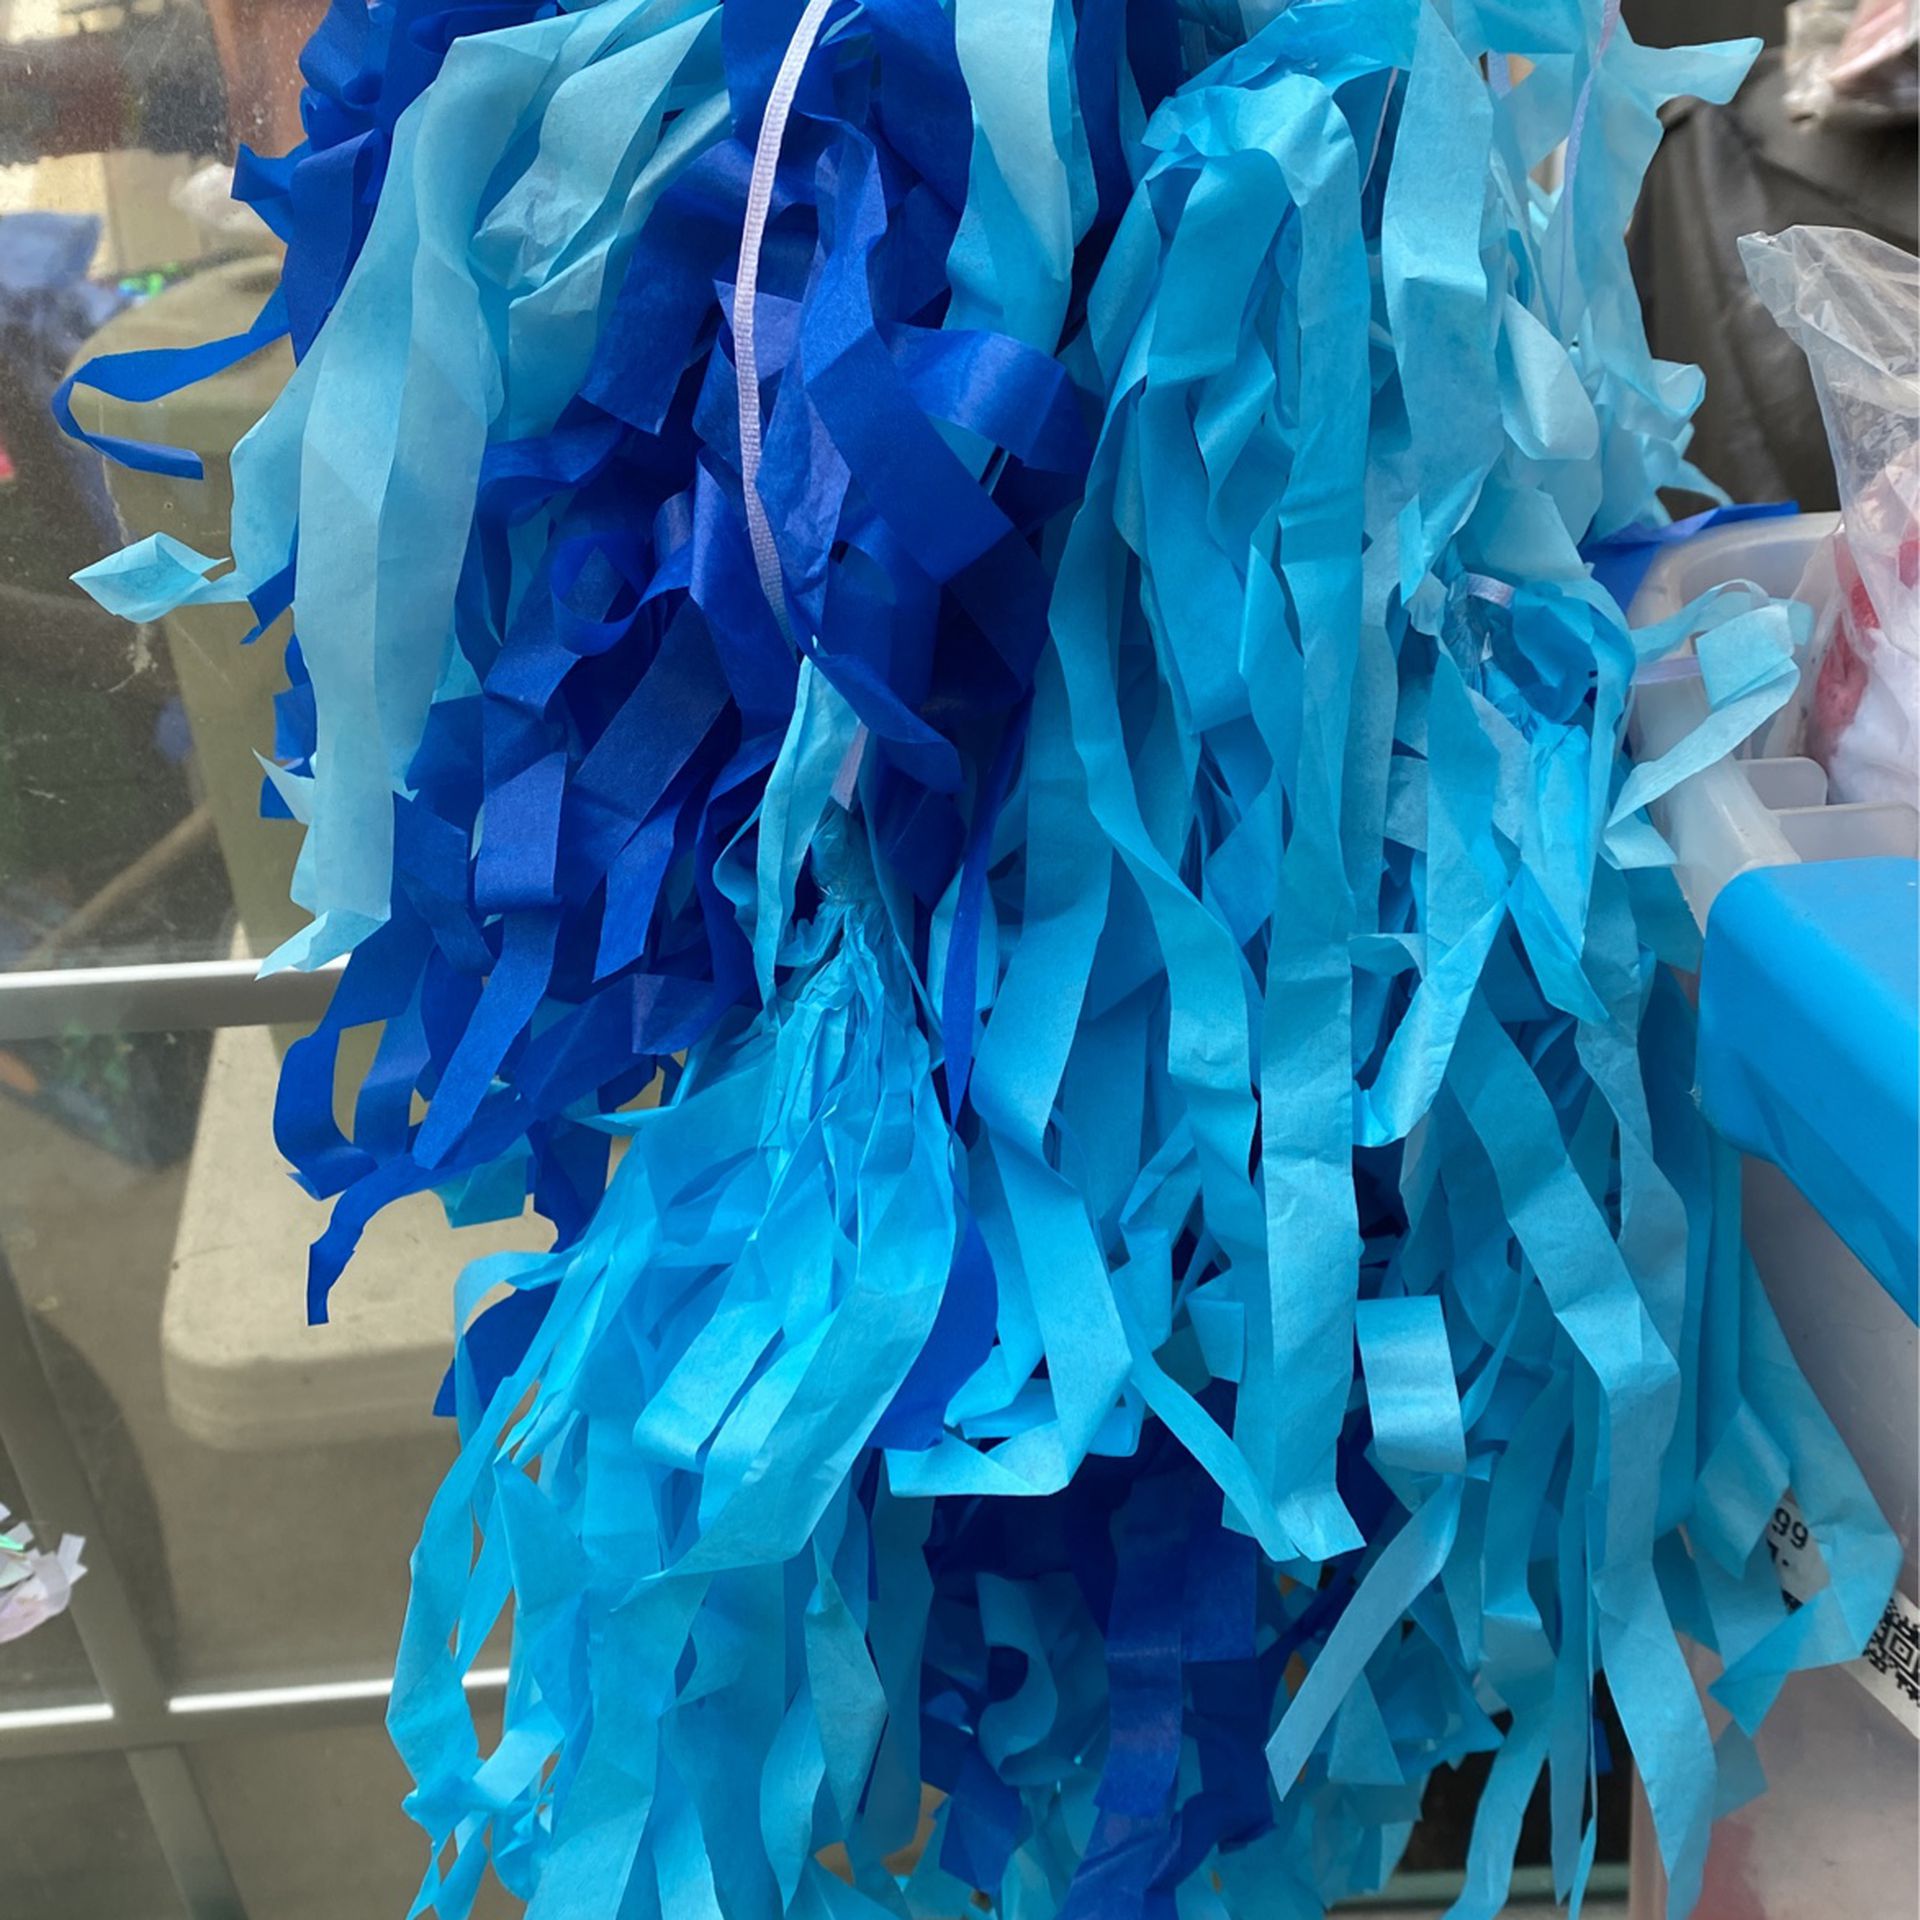 Bluey Birthday Party Supplies for Sale in Hacienda Heights, CA - OfferUp